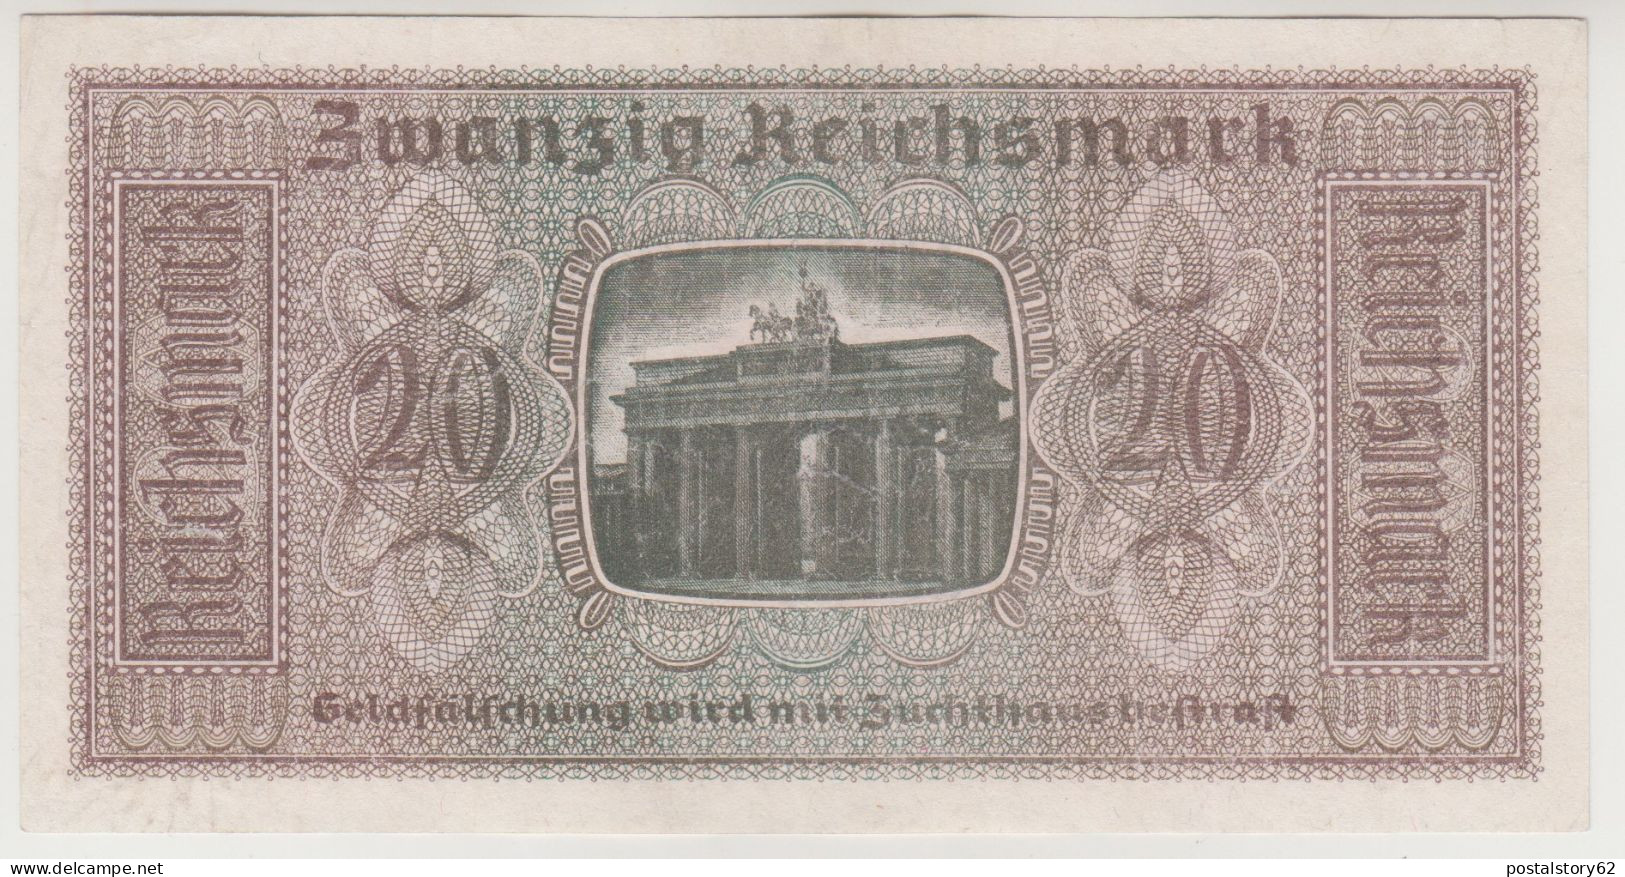 Germay - Occupied Territories - Banconota D'occupazione Tedesca 20 Reichsmark 1943 FDS - 20 Reichsmark